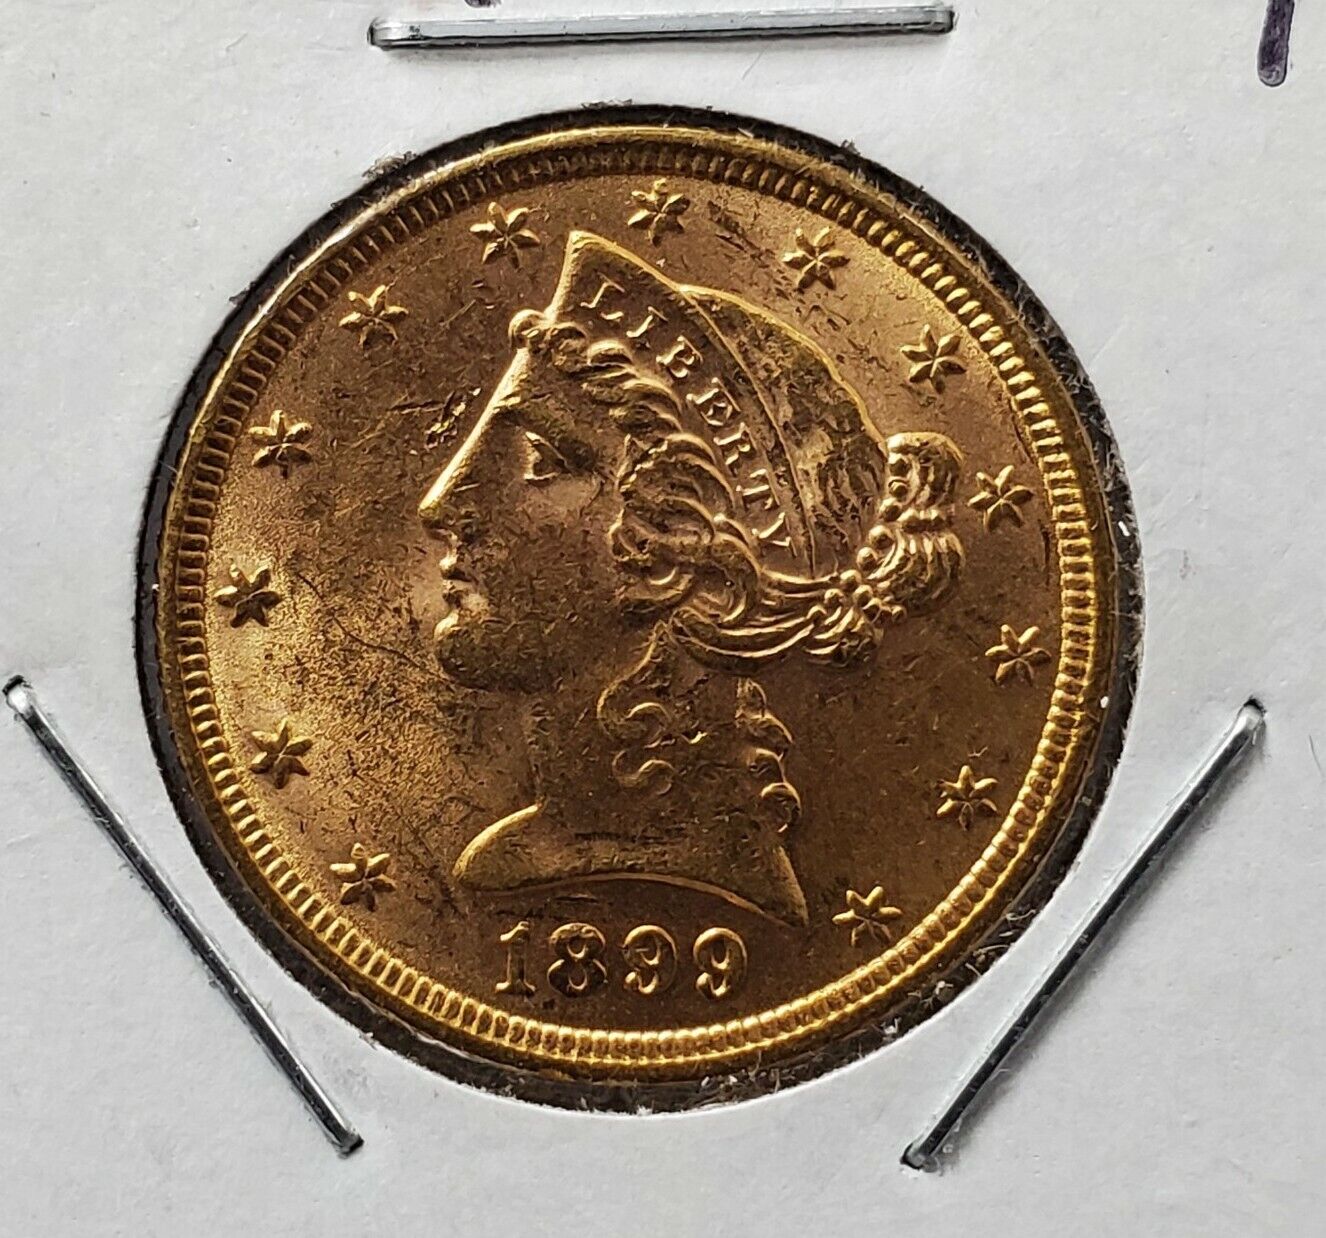 1899 P $5 Liberty Head Half Eagle Reverse US Type Gold Coin CHOICE BU PRE-1933